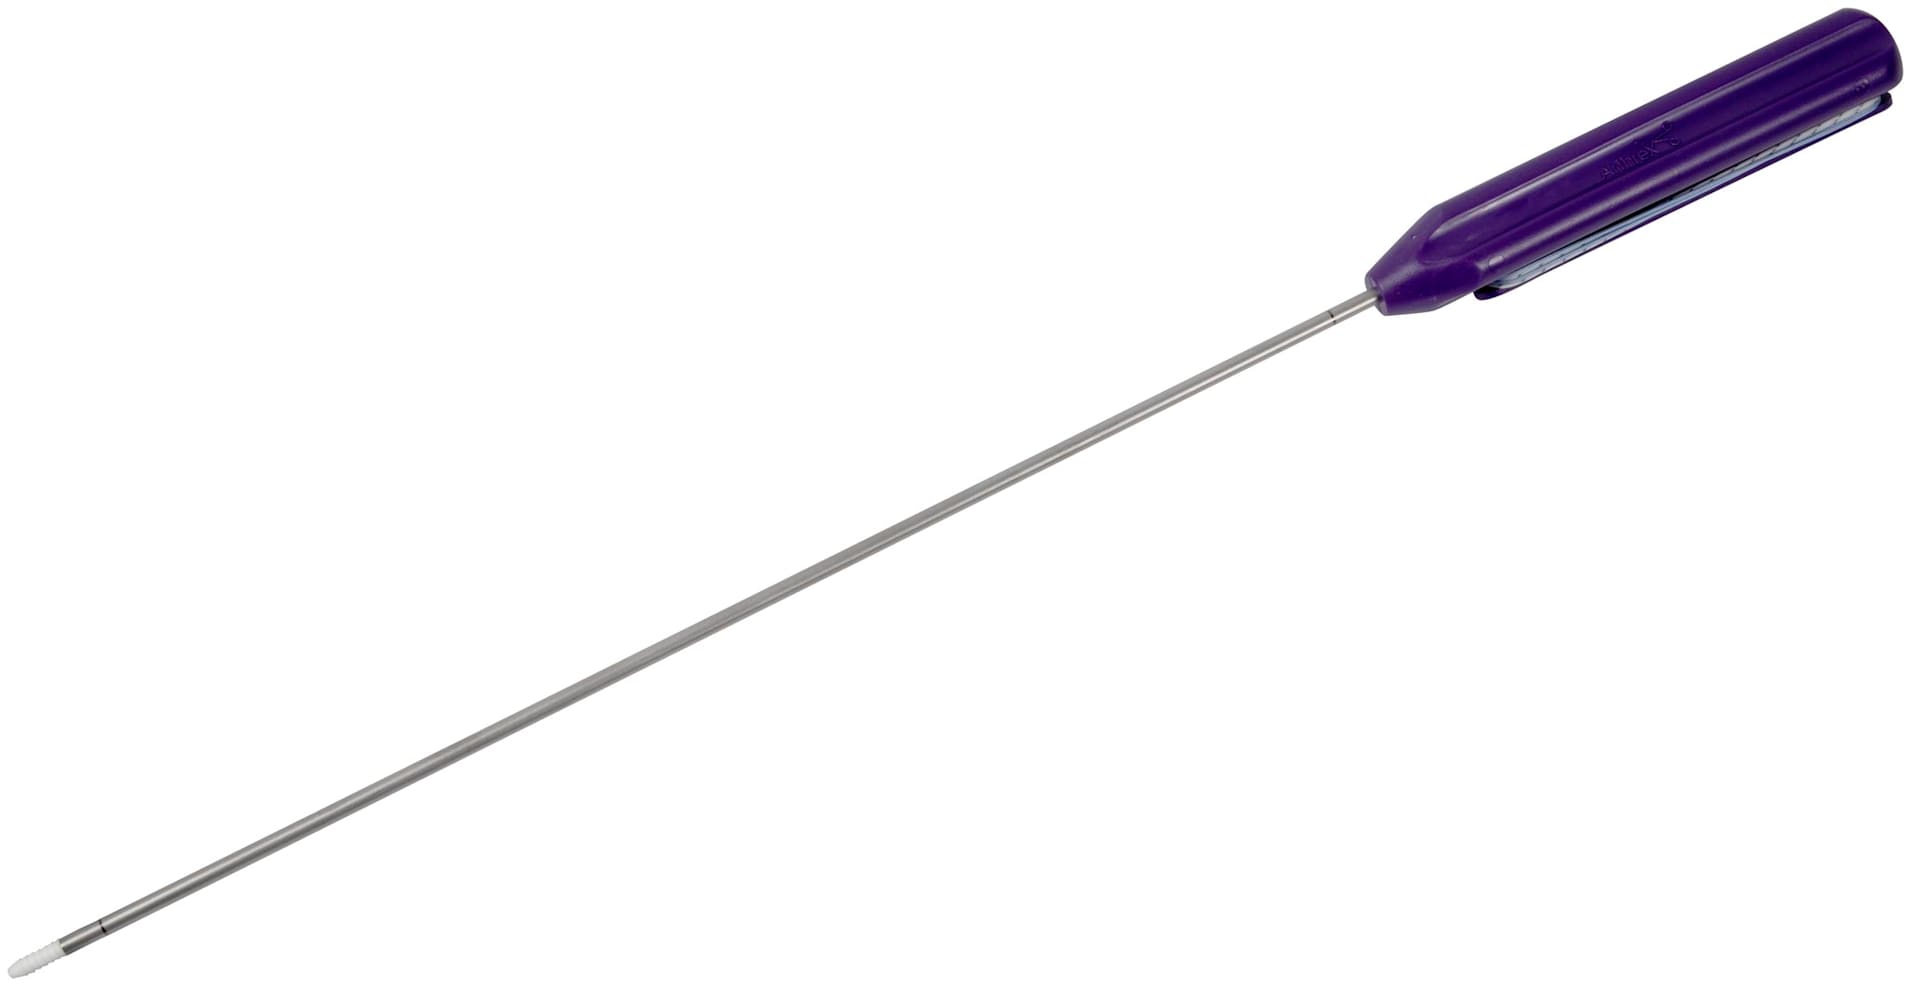 BioComposite SutureTak Suture Anchor, 3 mm x 14.5 mm w/ two #2 FiberWire